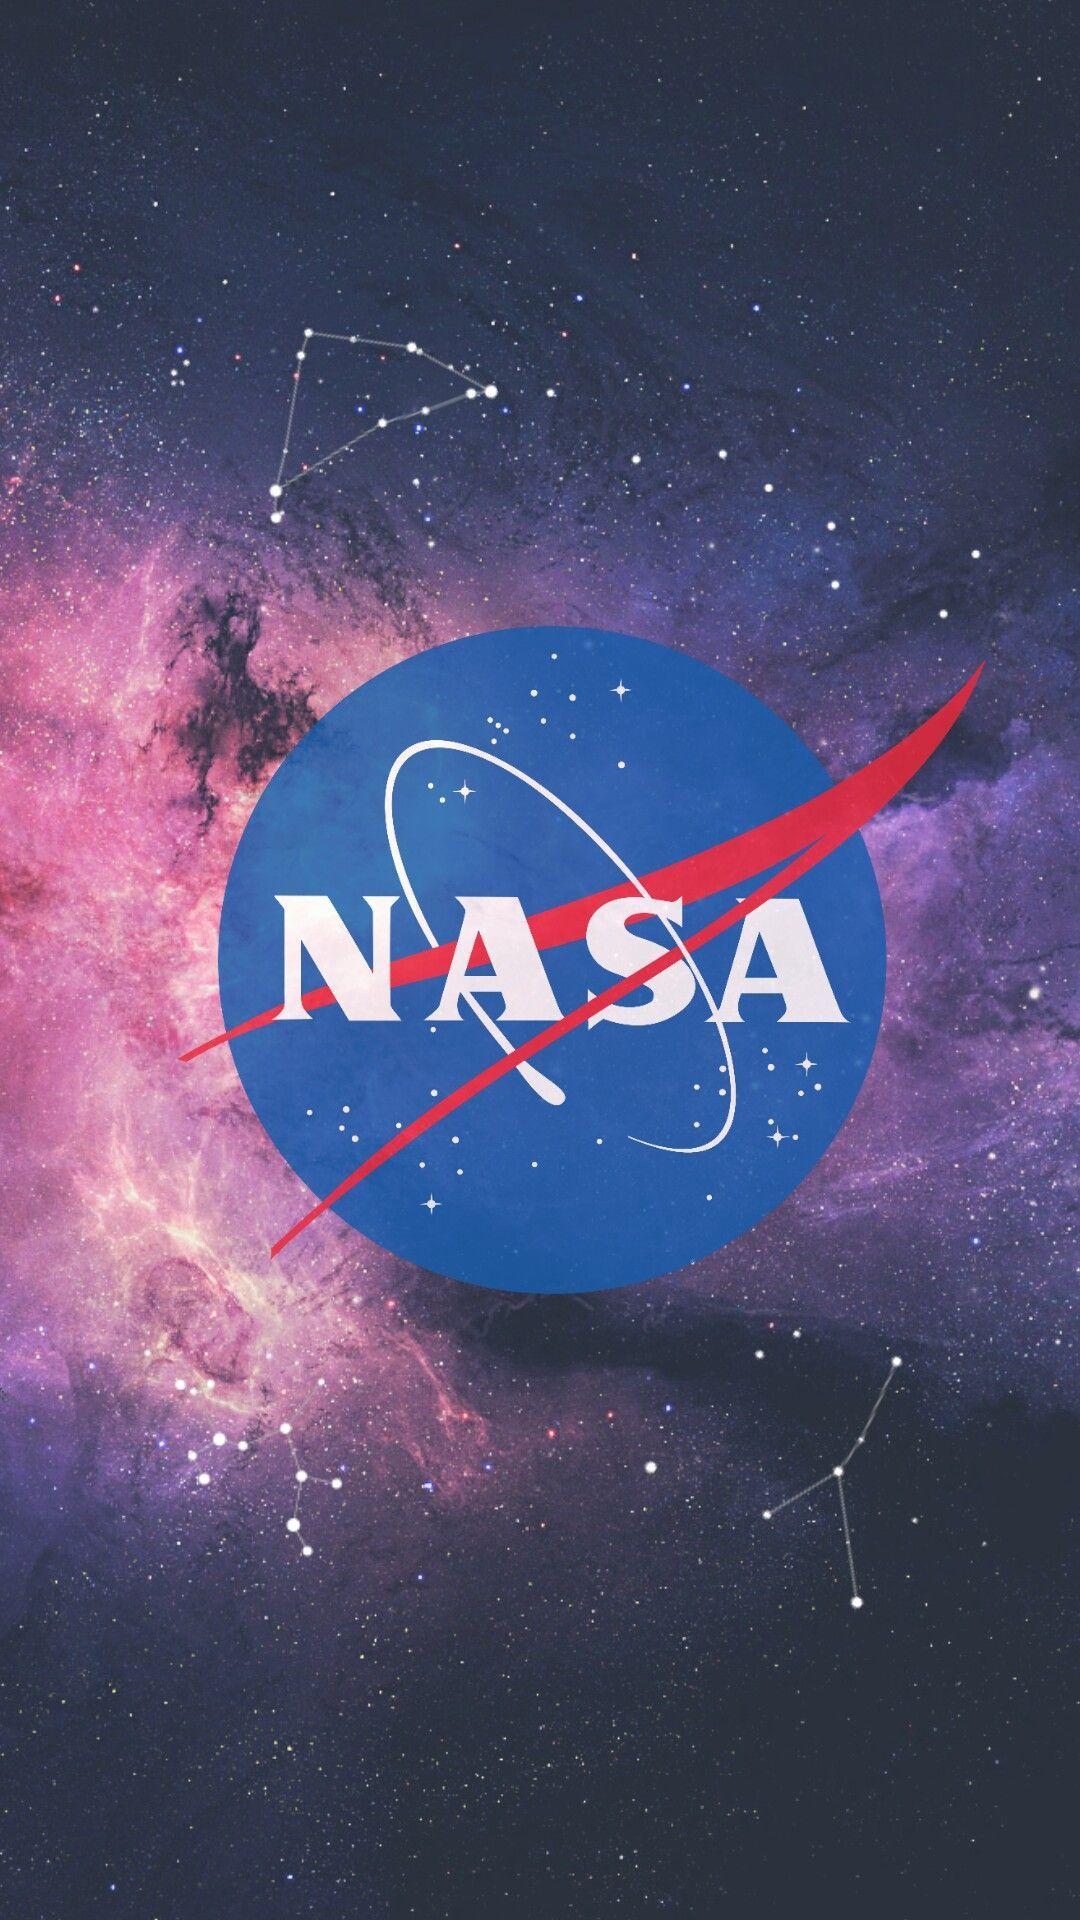 NASA Logo iPhone Wallpaper Free NASA Logo iPhone